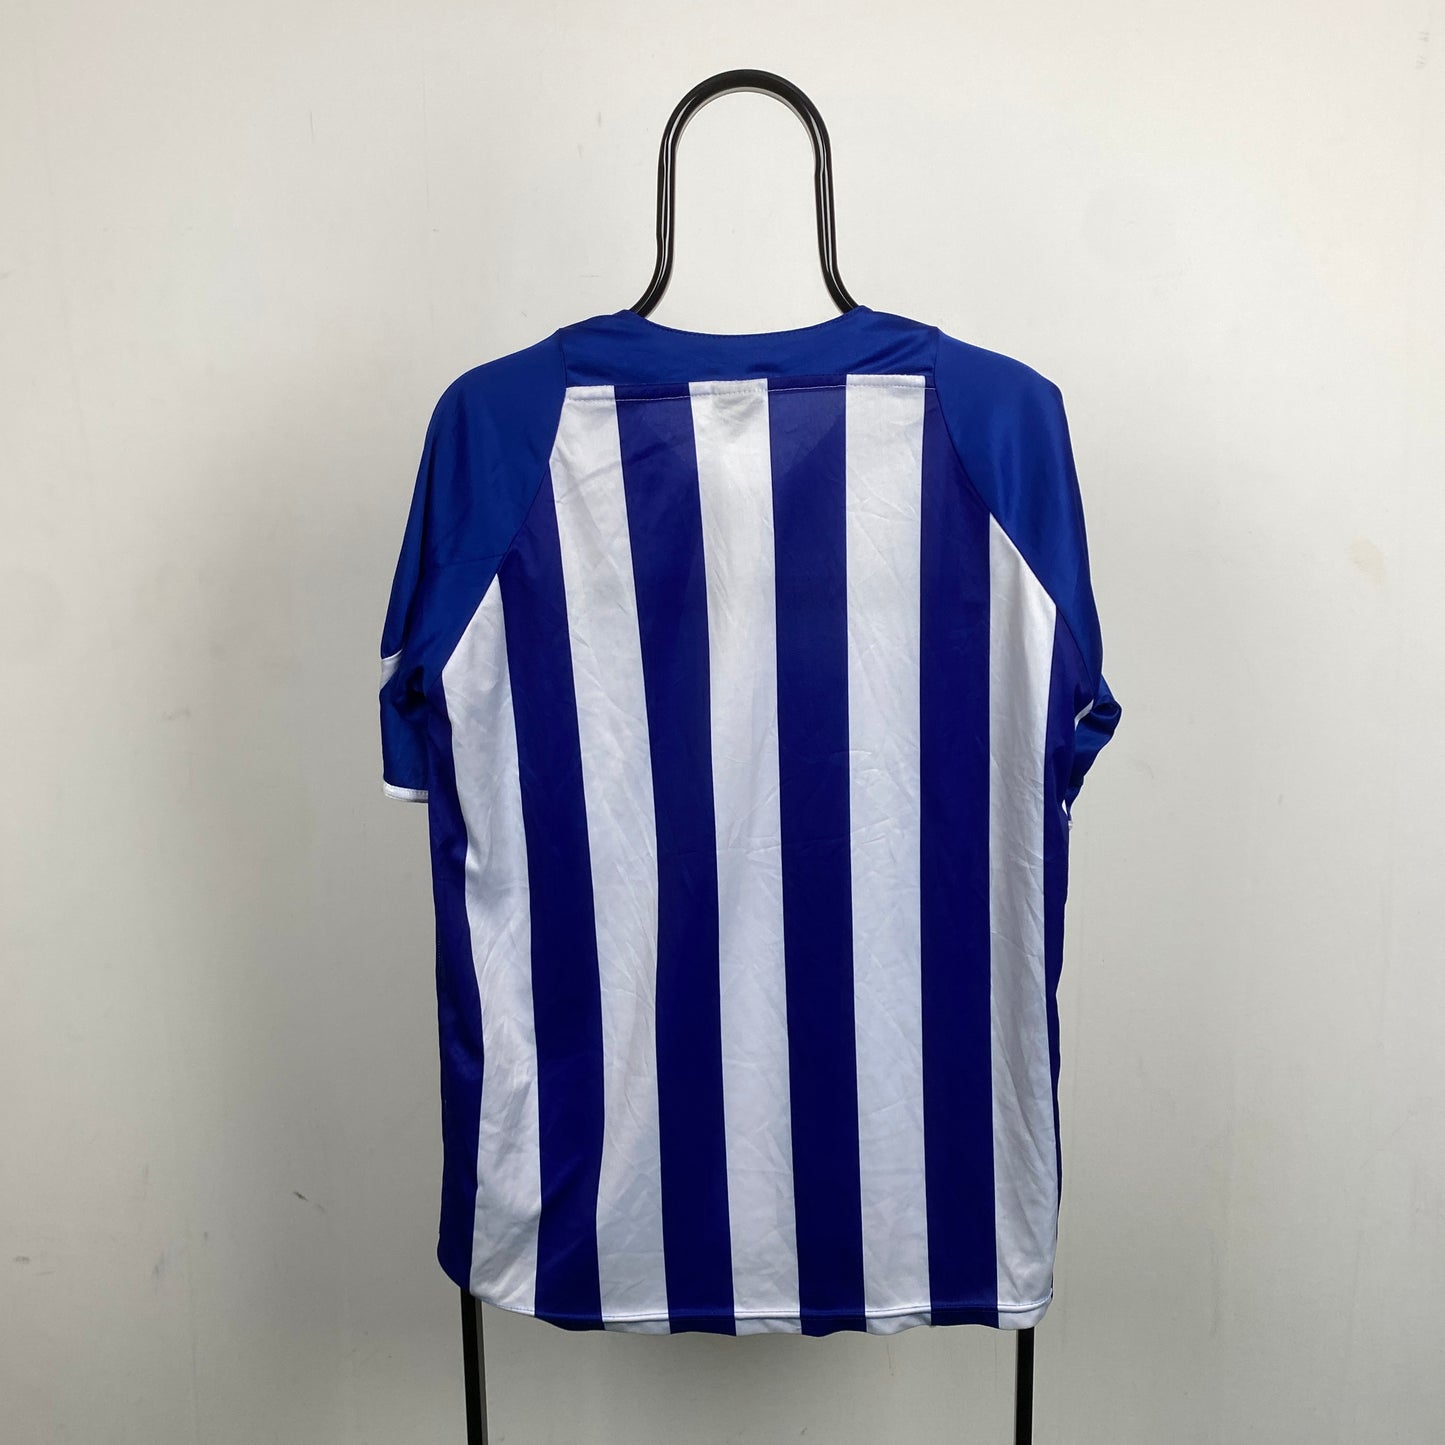 Retro 90s Porto Fan Style Football Shirt T-Shirt Blue XL